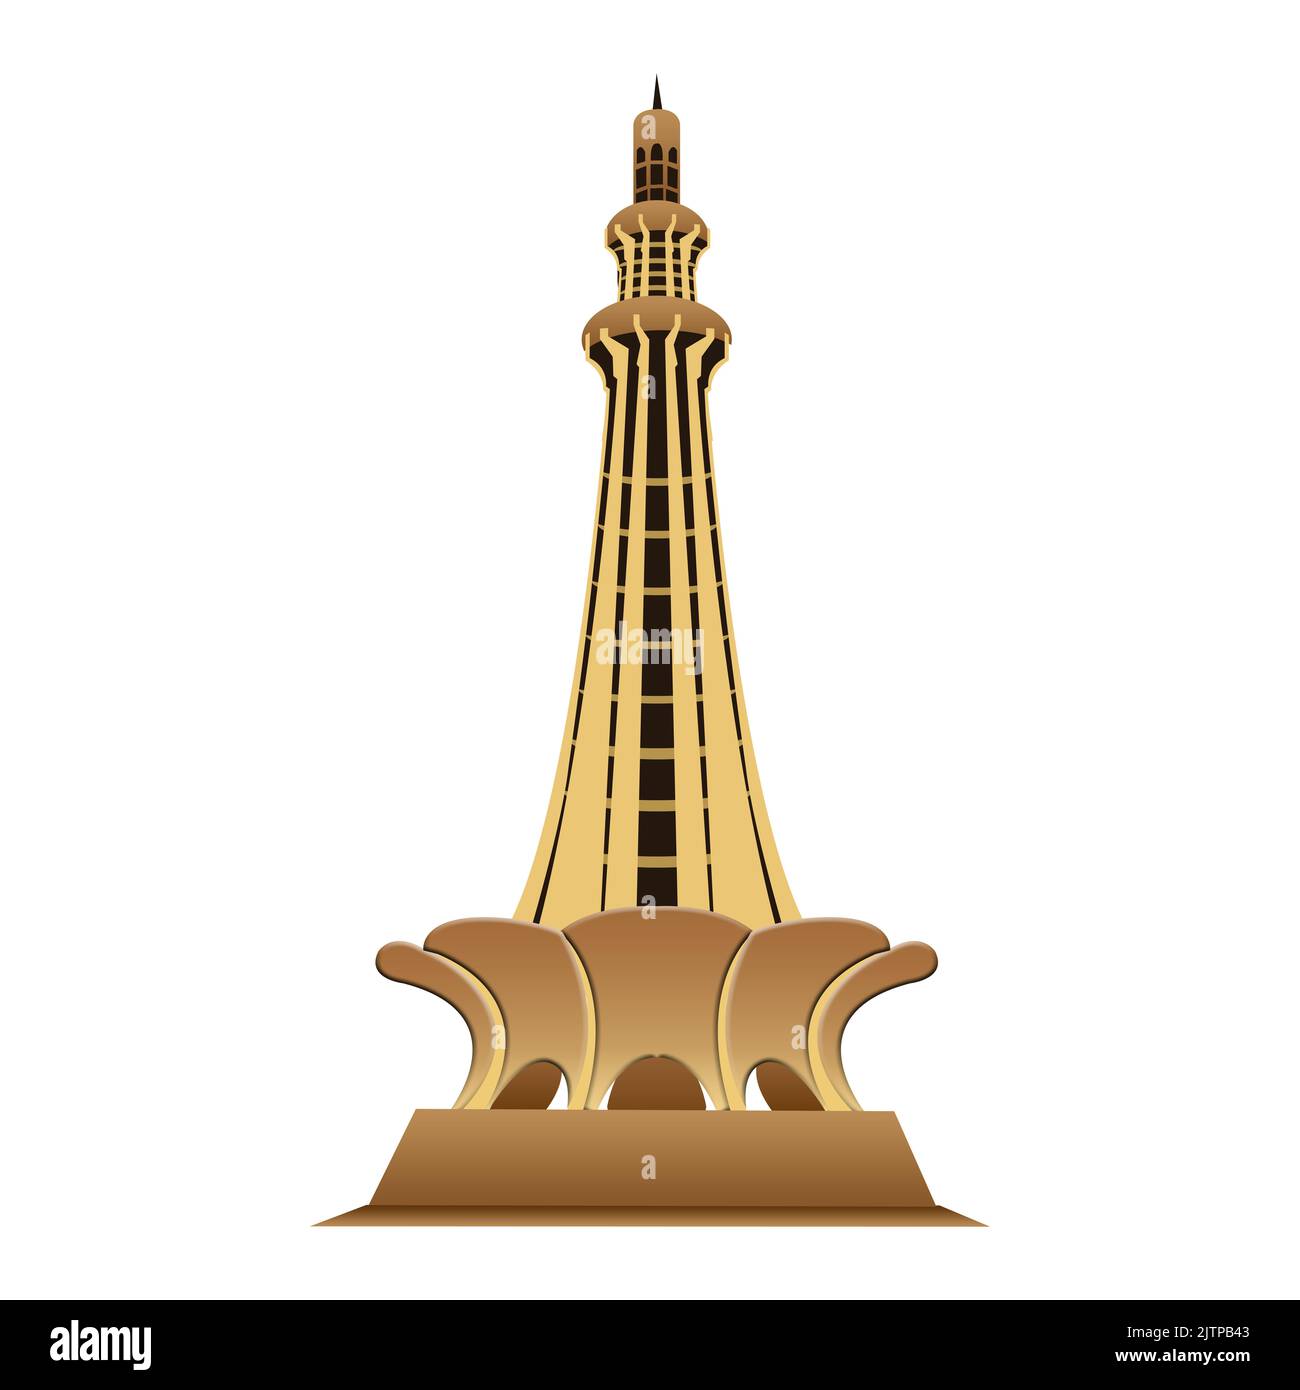 Minar e Pakistan in Lahore City Illustration Minar e pakistan Stock Photo